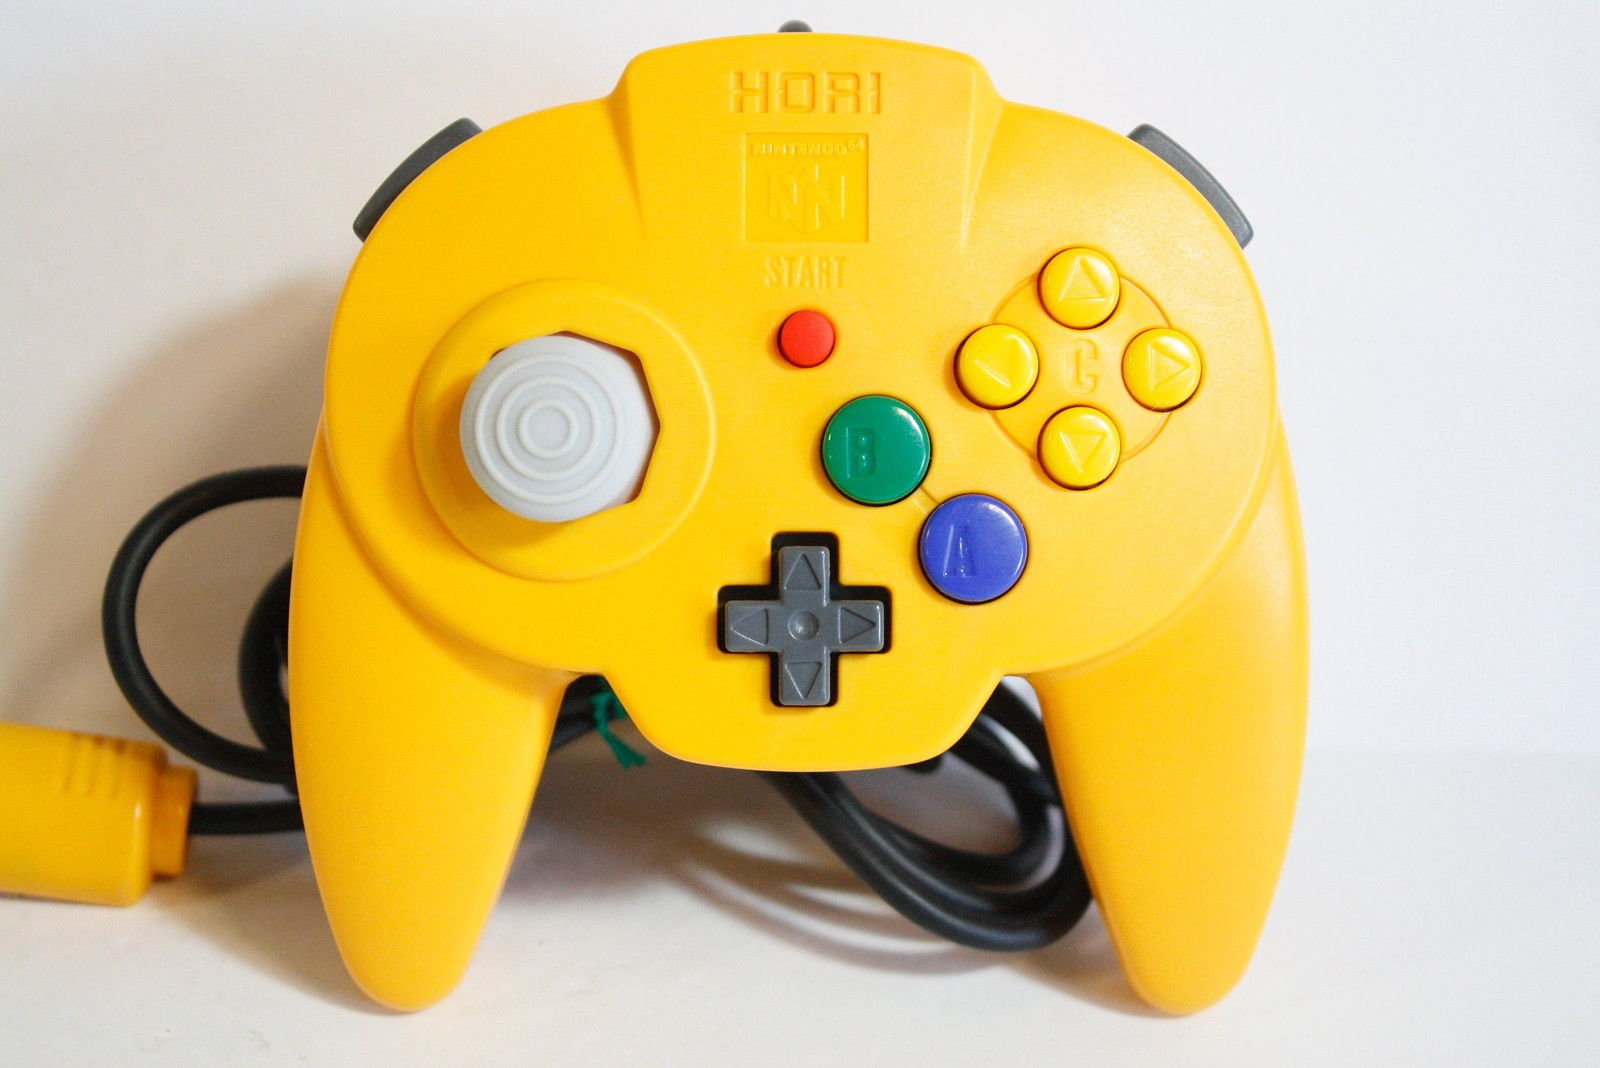  Horipad Mini 64 yellow N64